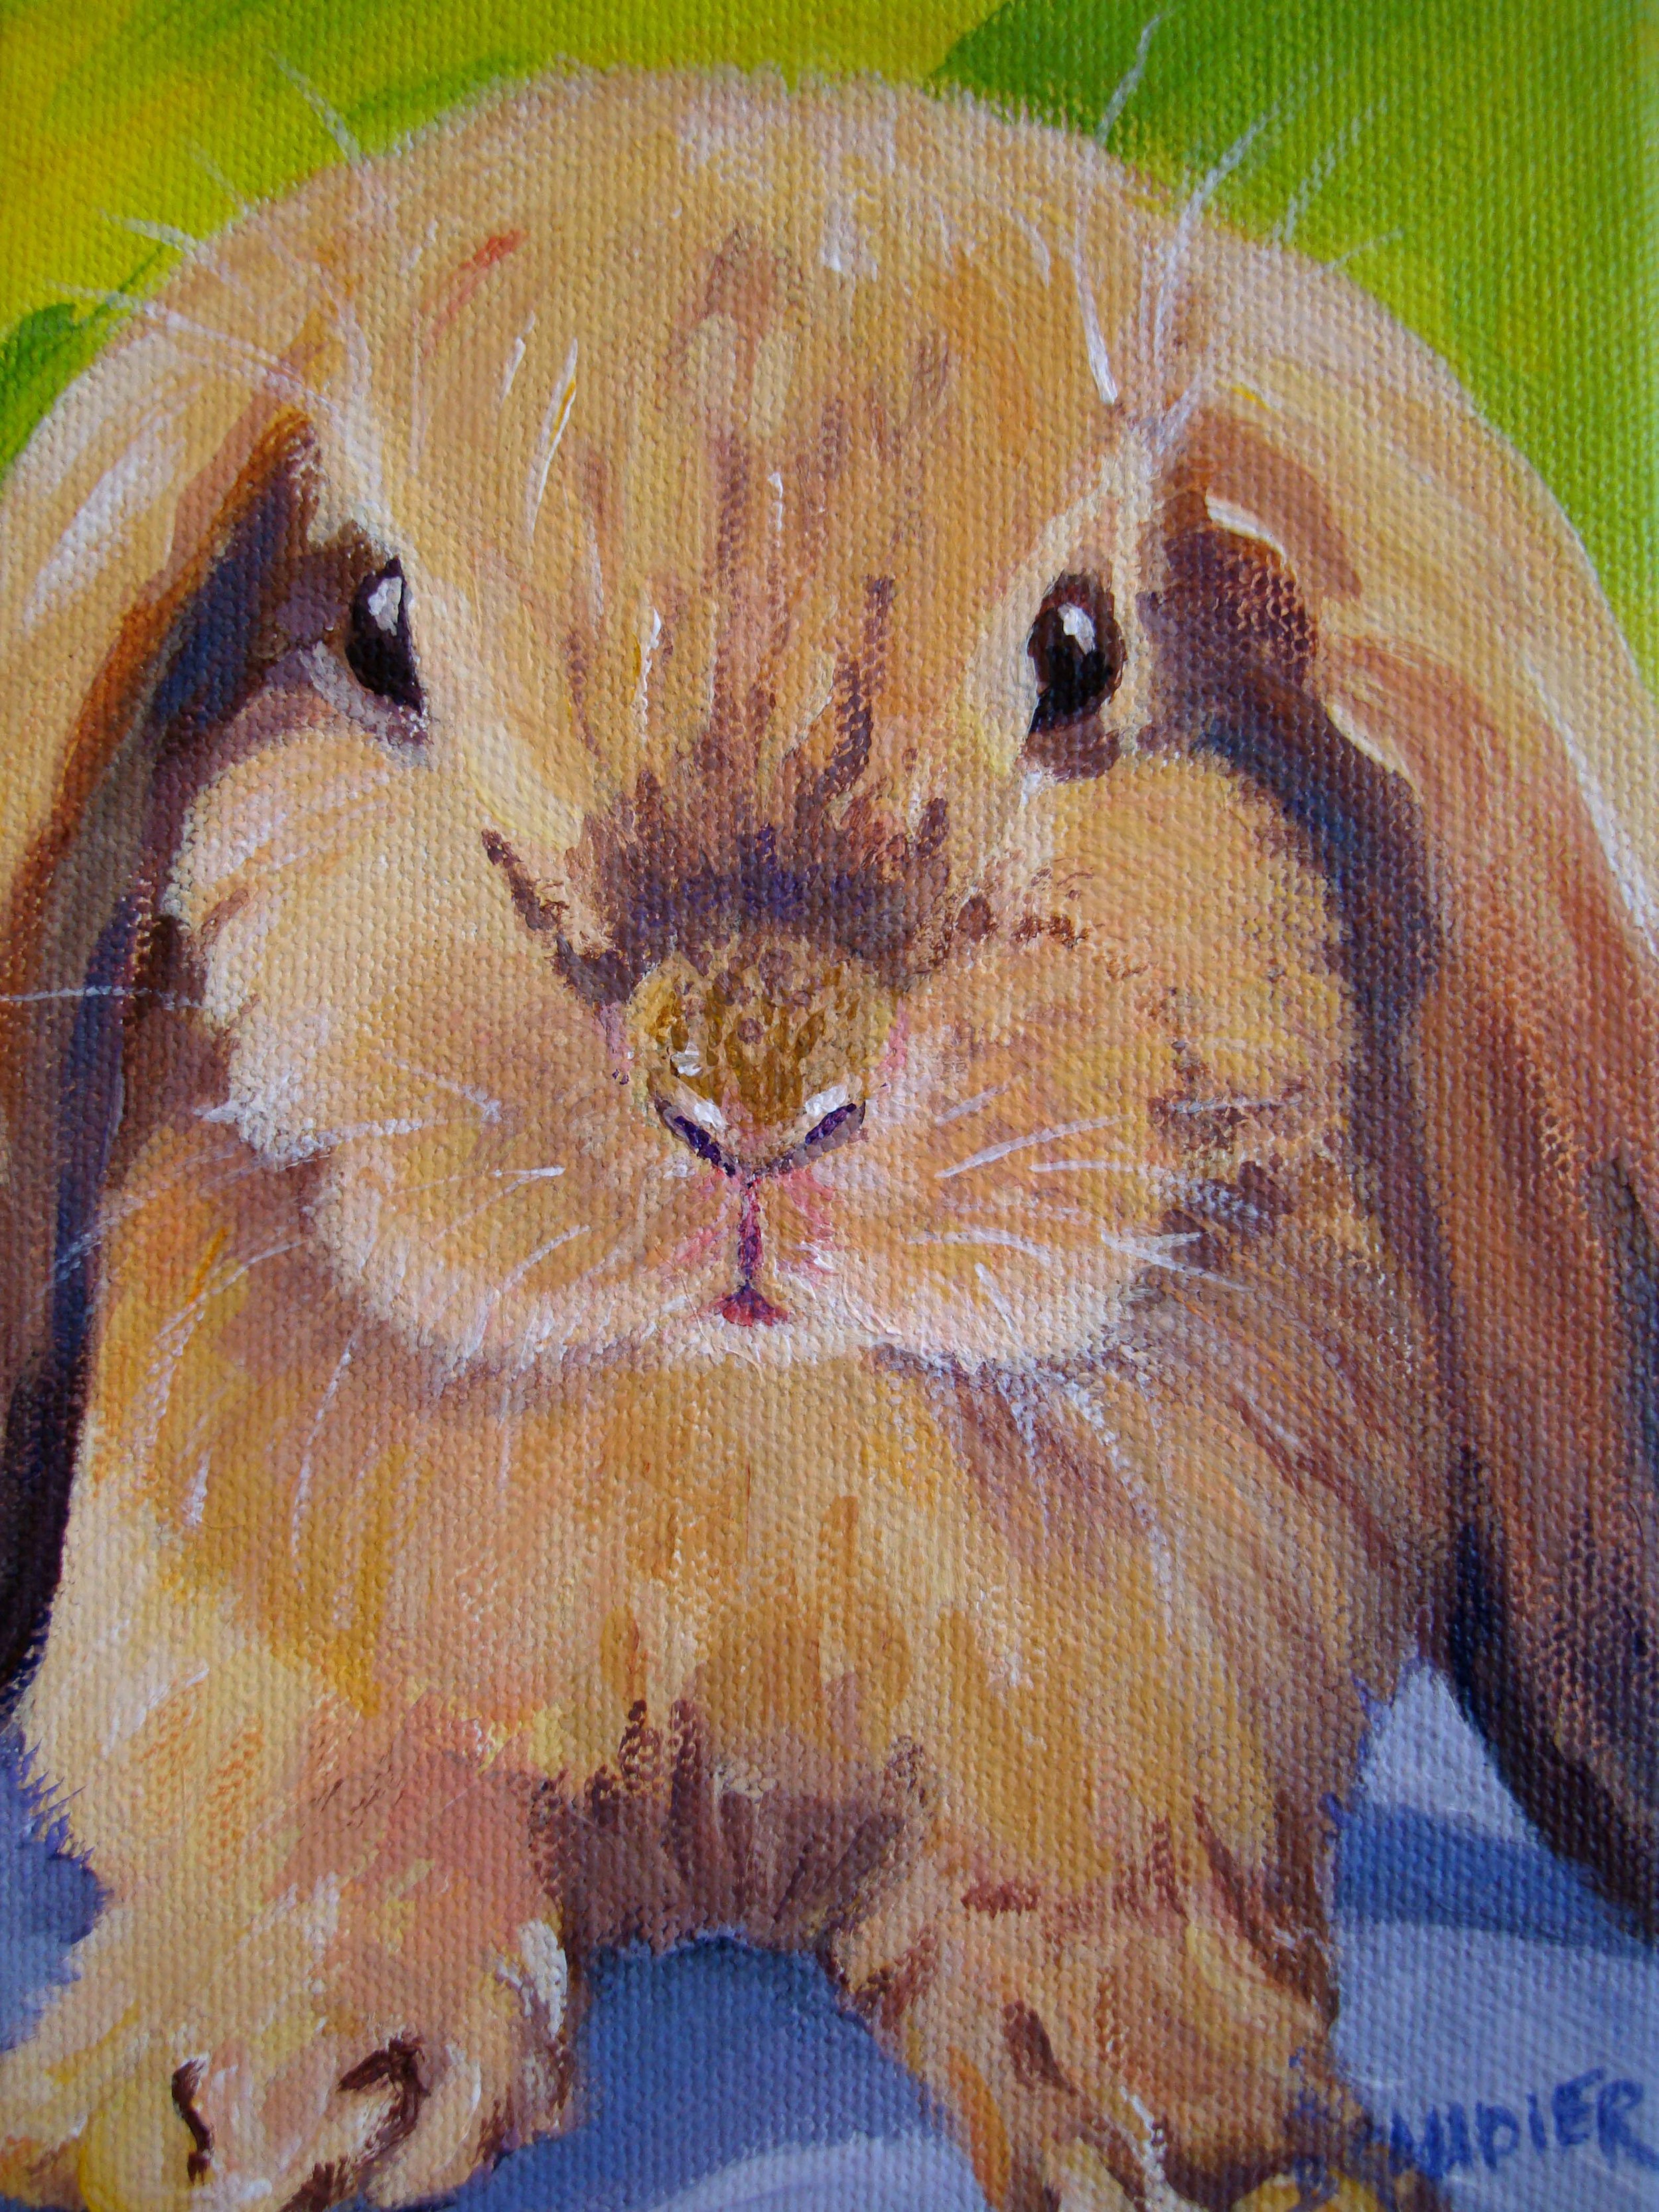 Champagne Bunny archive - acrylic on canvas 5x7.jpg